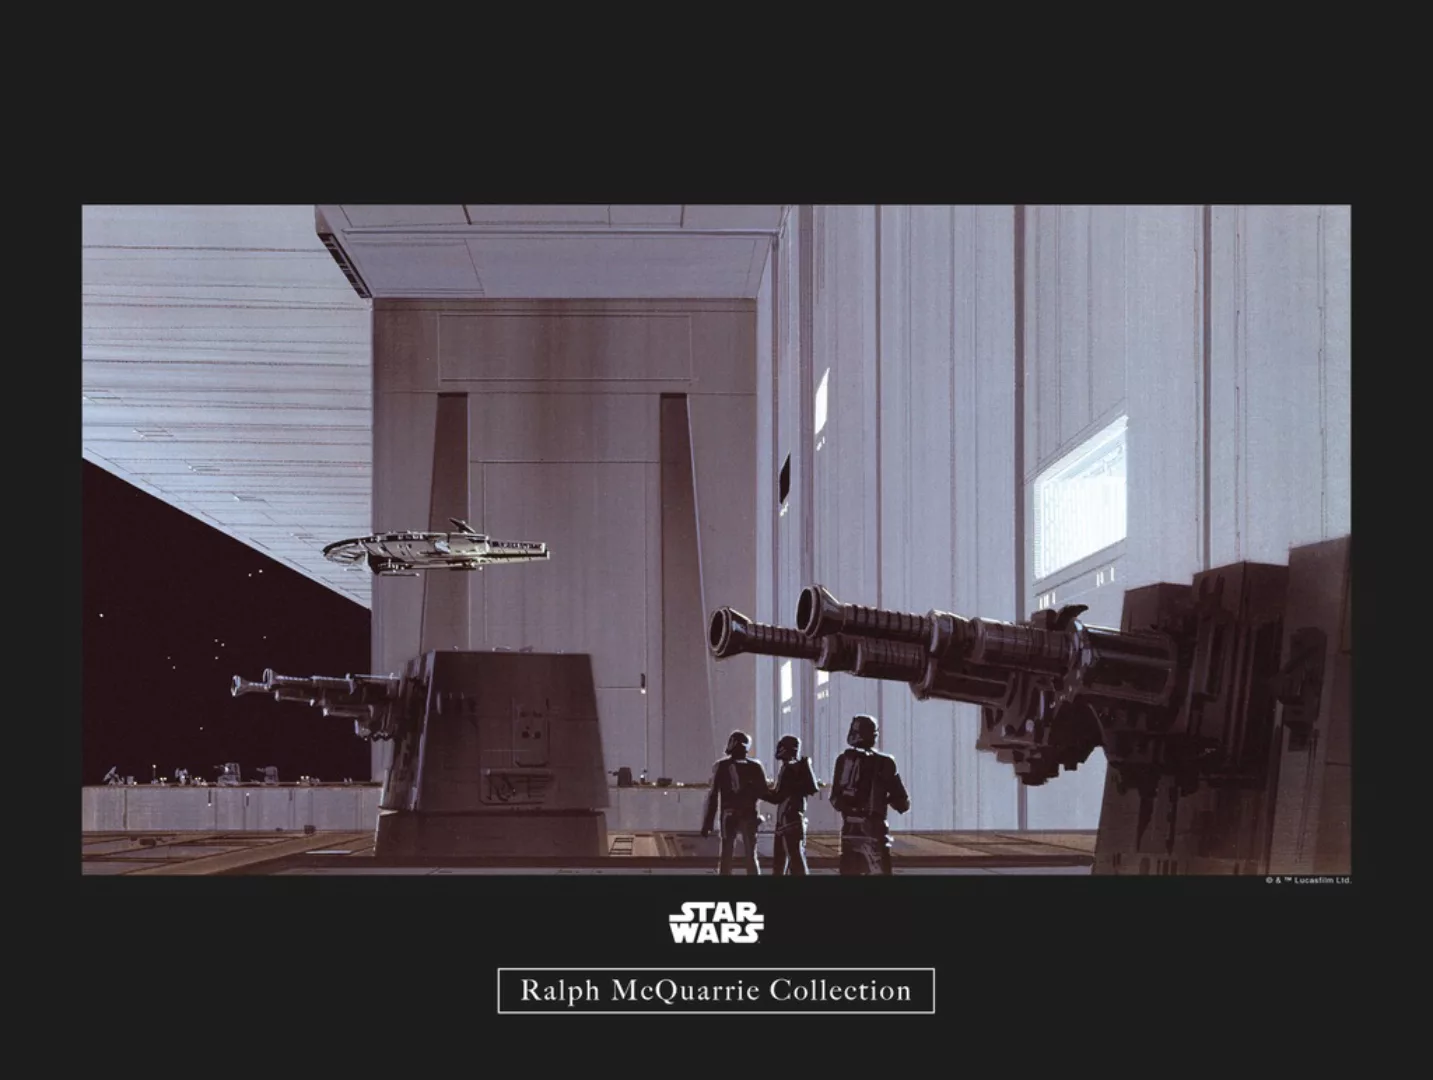 Komar Wandbild Star Wars Hangar 40 x 30 cm günstig online kaufen